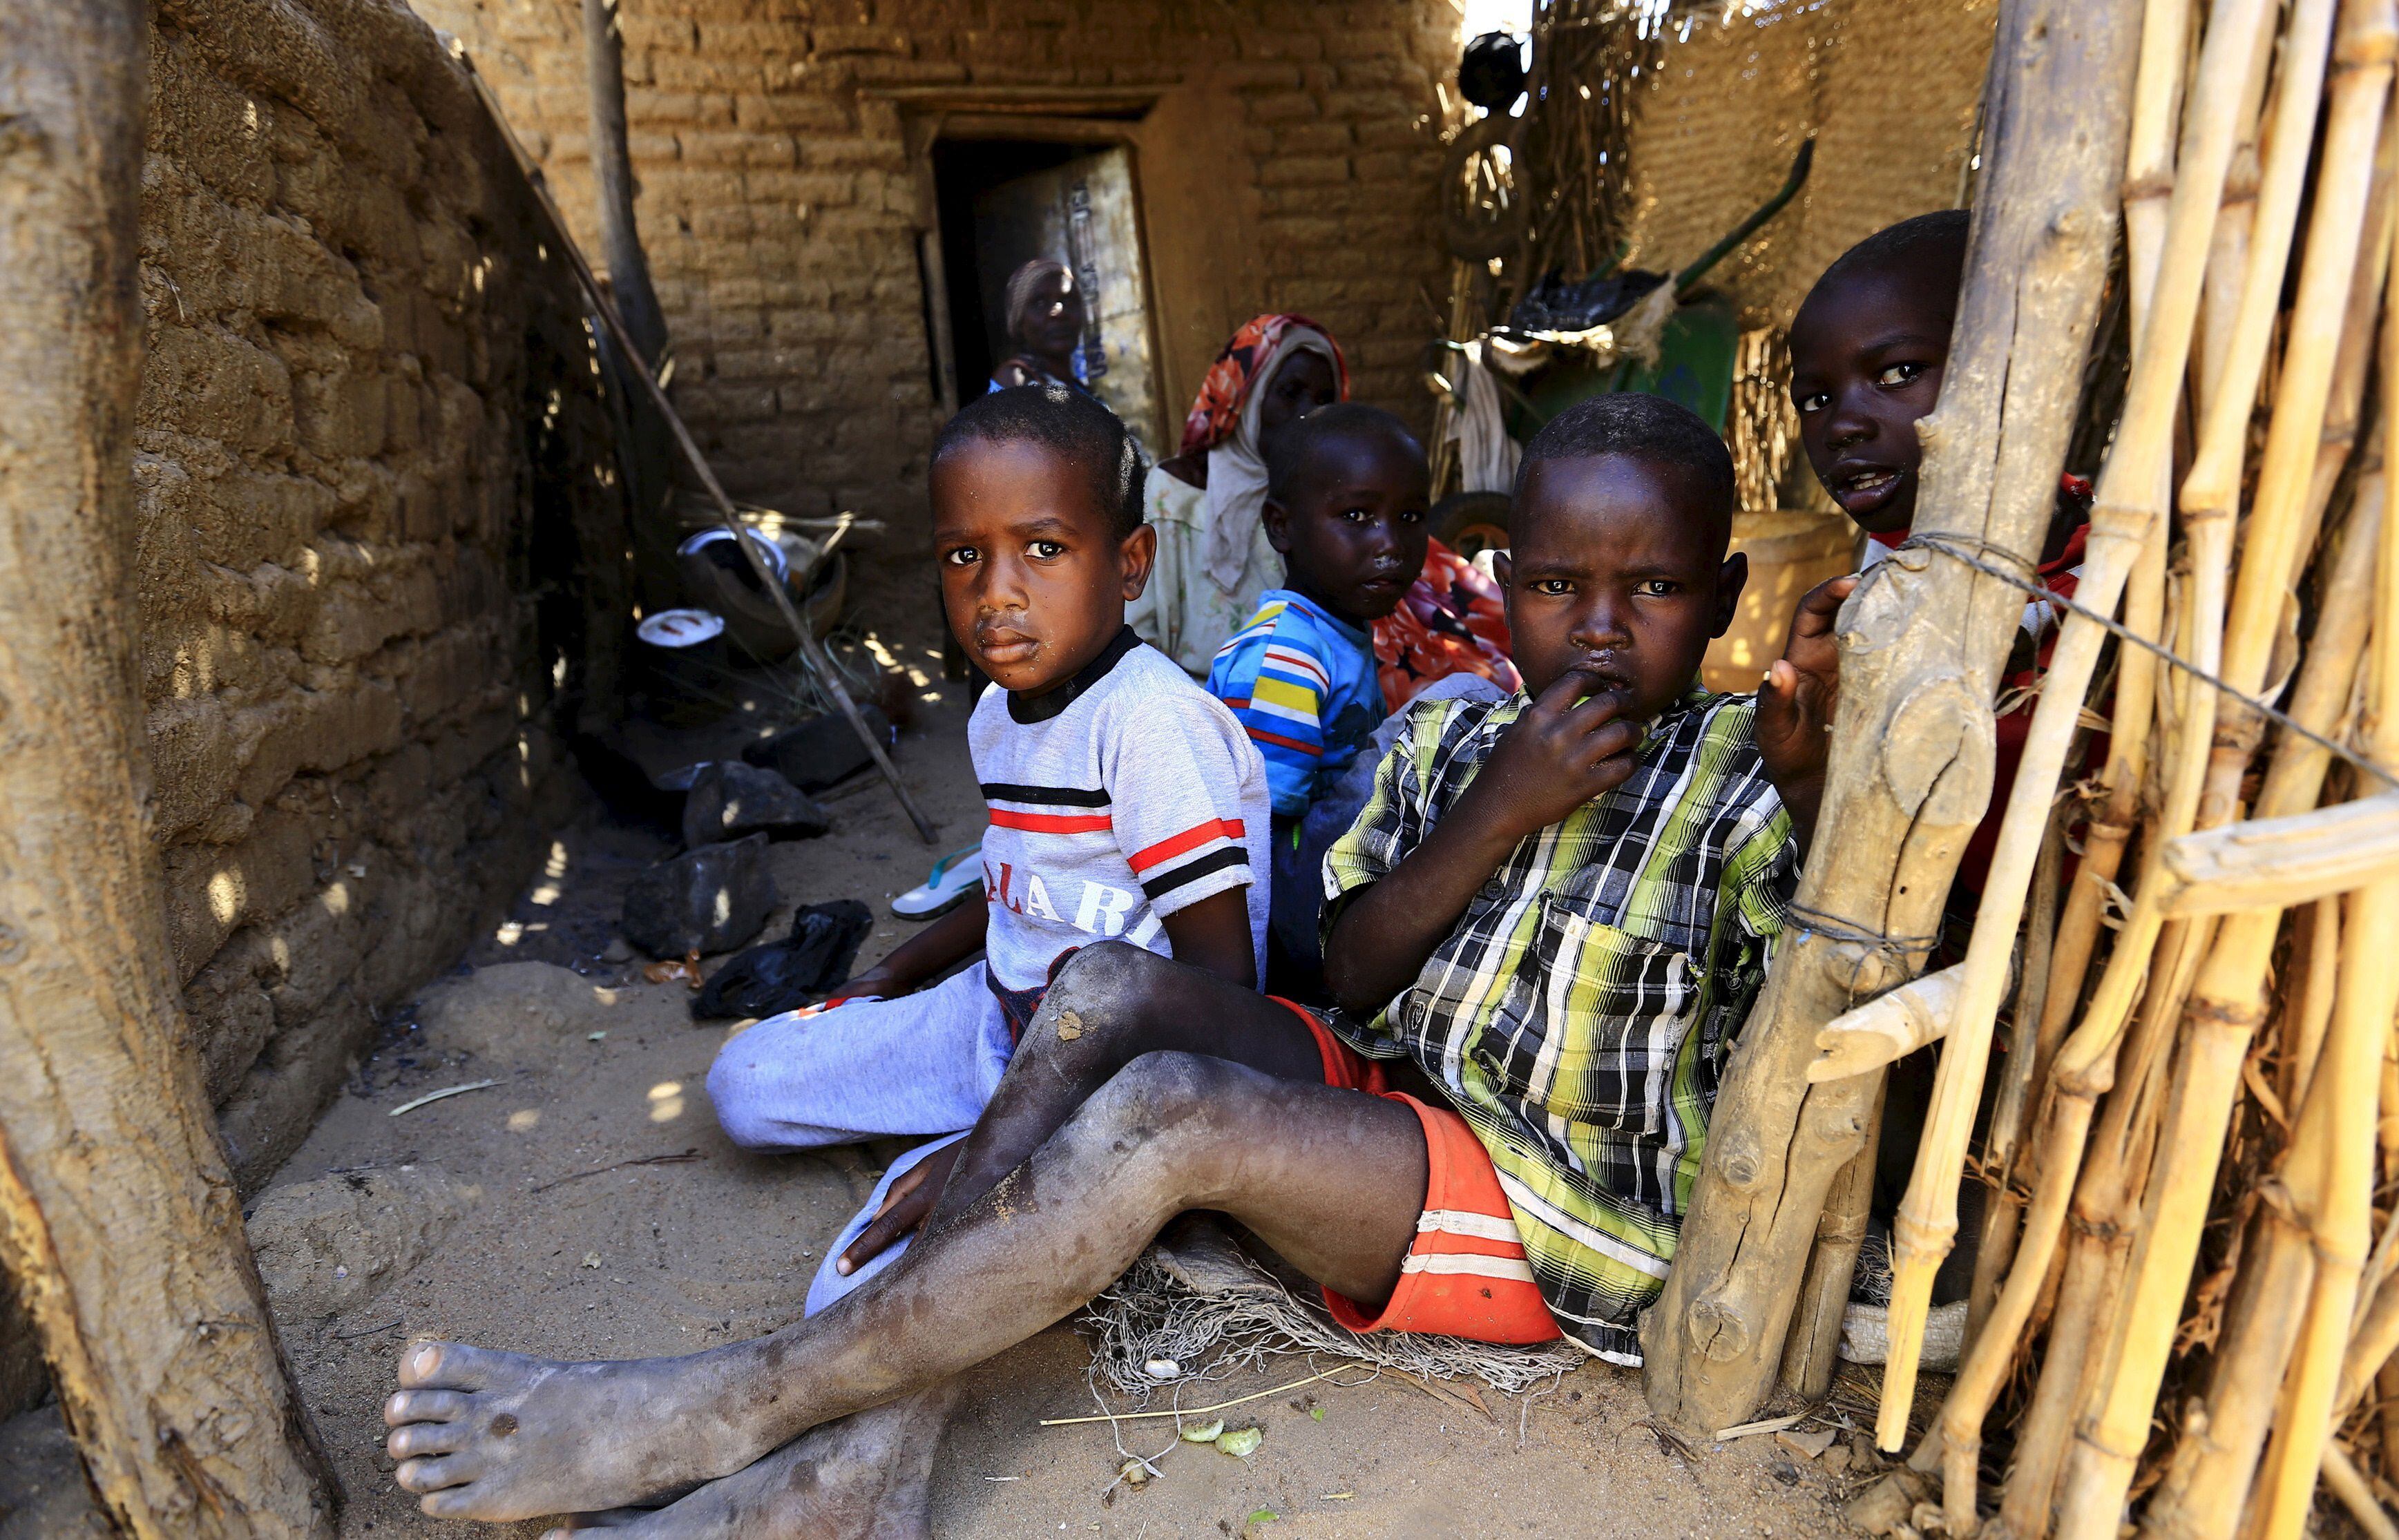 14-12-2015 Desplazados Internos en SudánPOLITICA AFRICA SUDÁN INTERNACIONALMOHAMED NURELDIN ABDALLAH / R